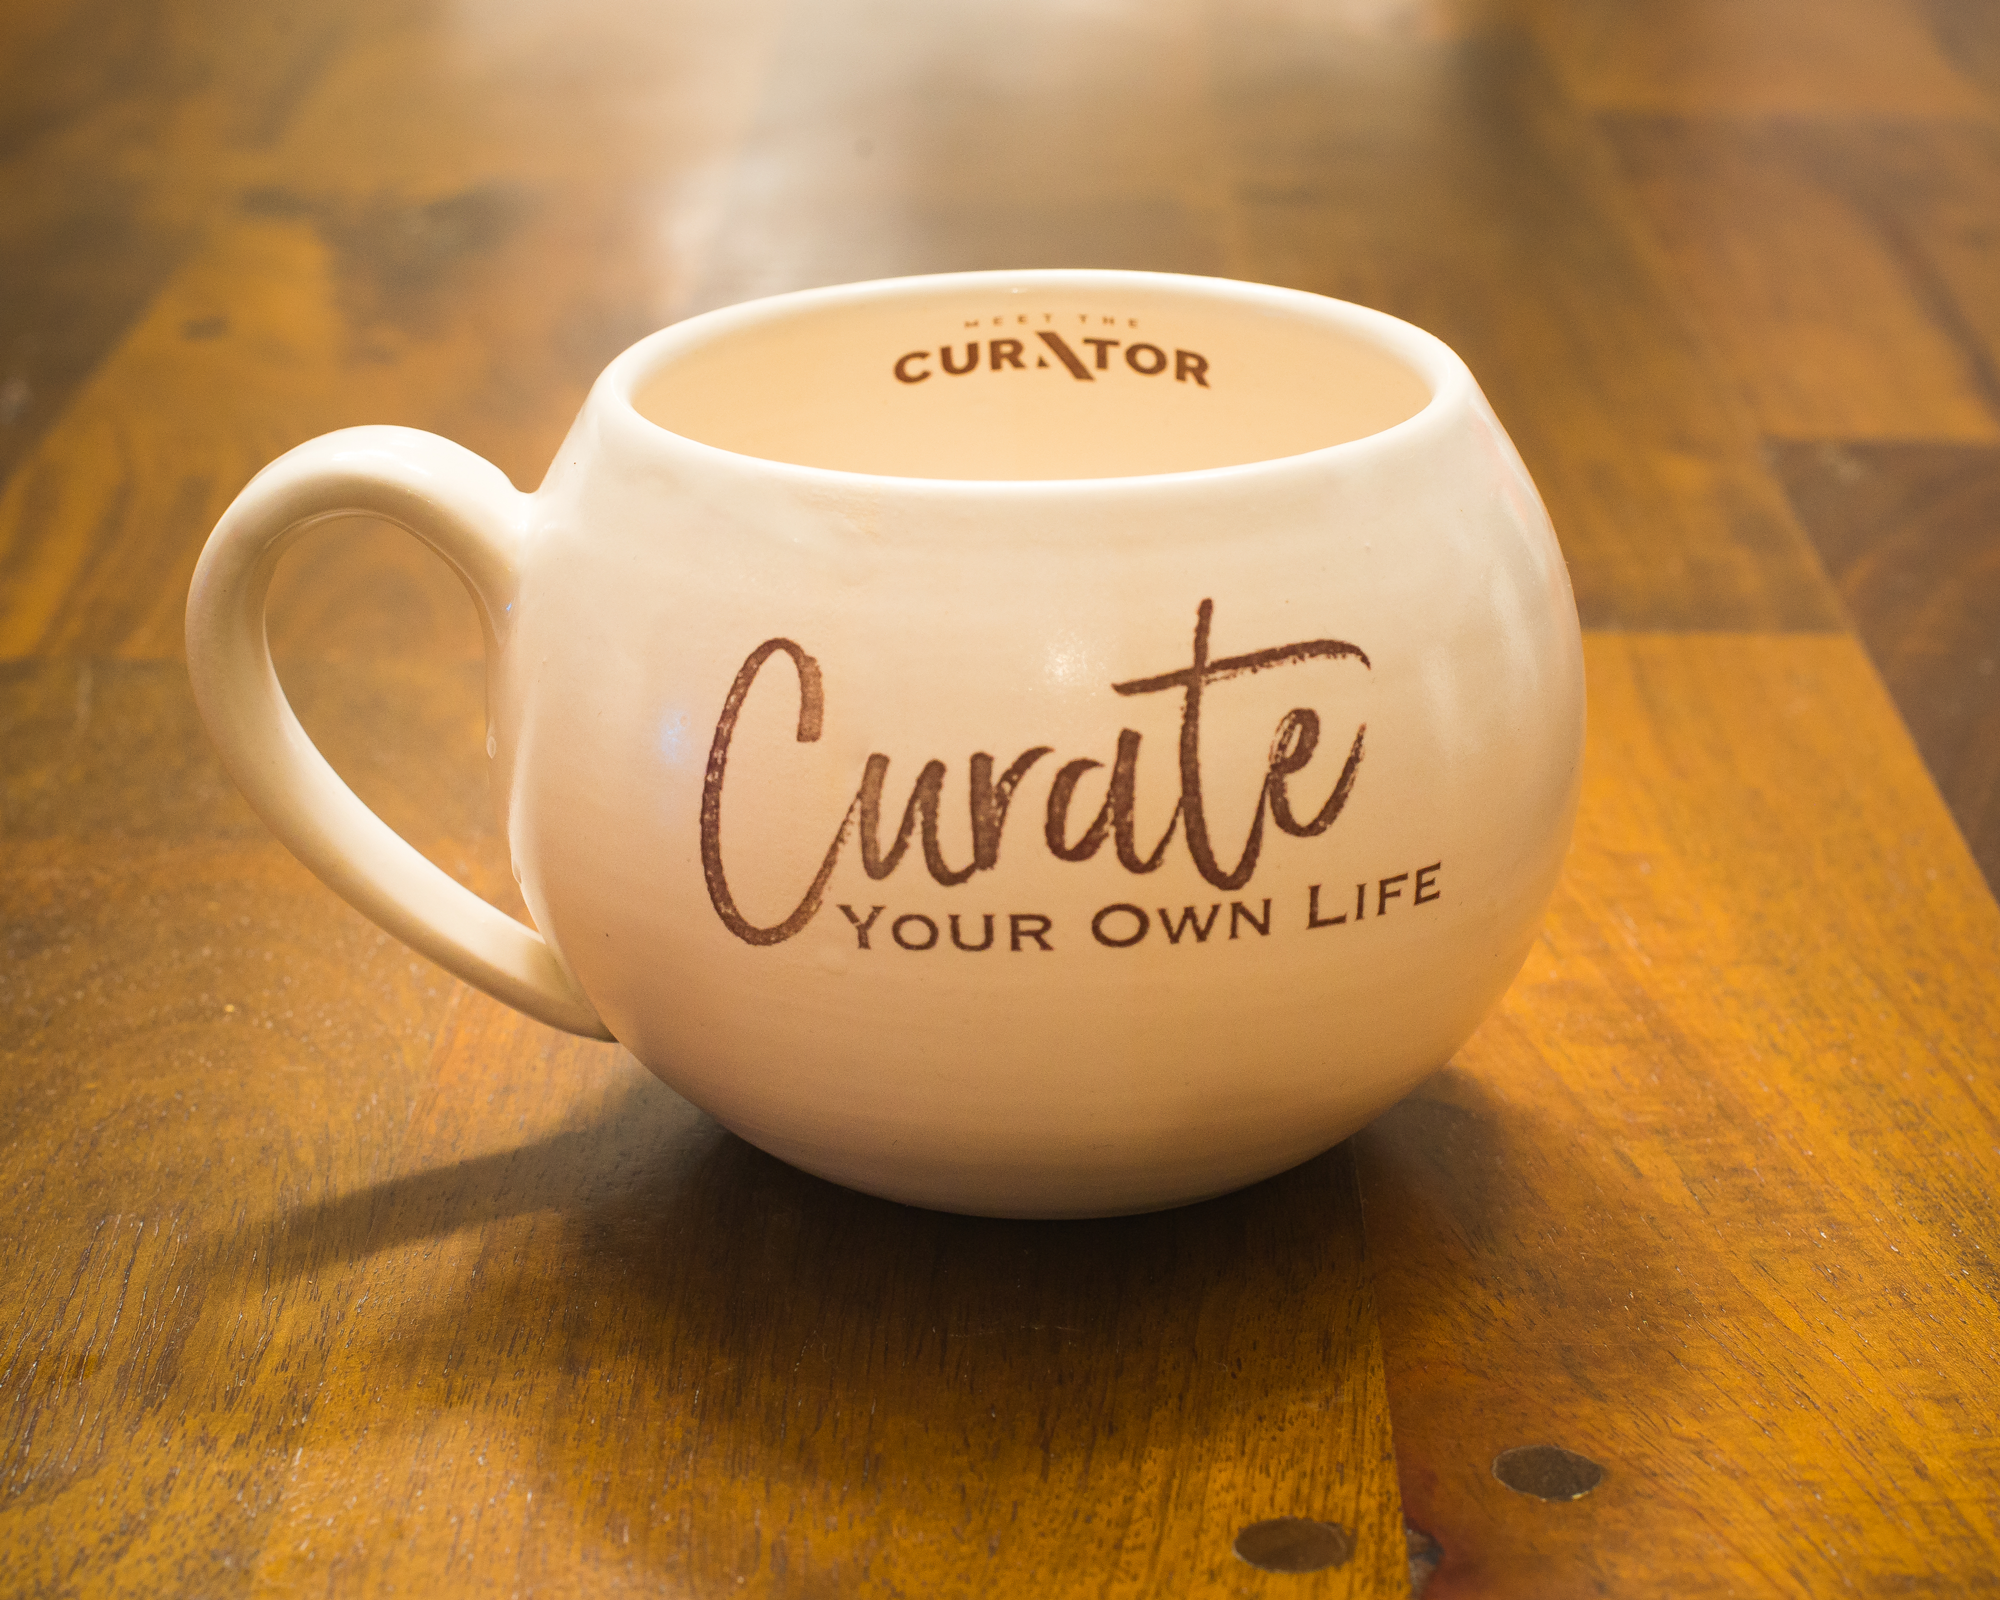 Curate Your Own Life Coffee Mug